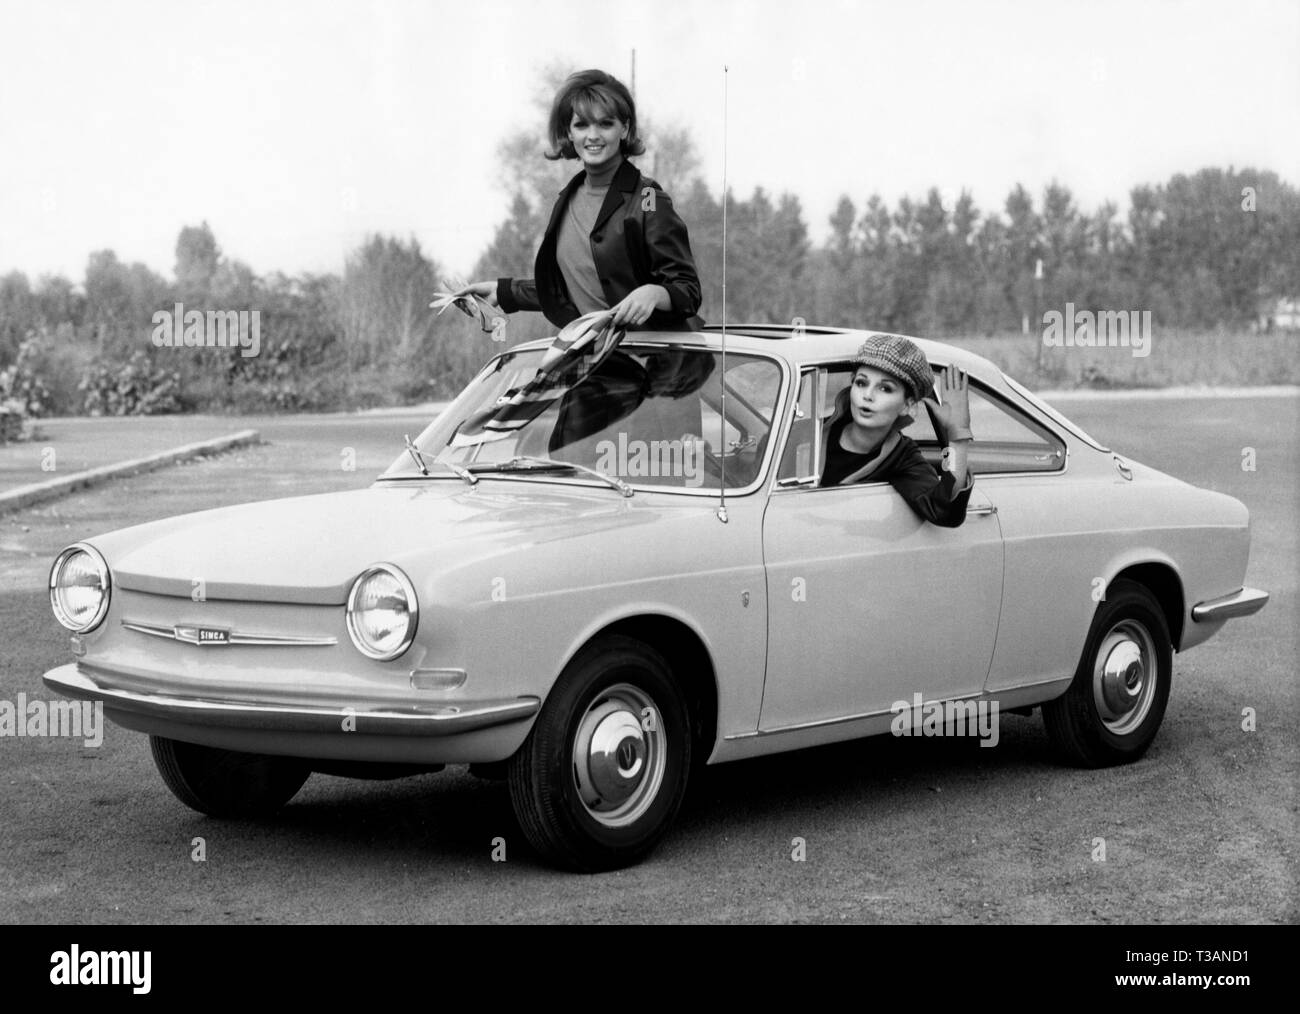 simca 1000 coupè, bertone body, 1963 Stock Photo